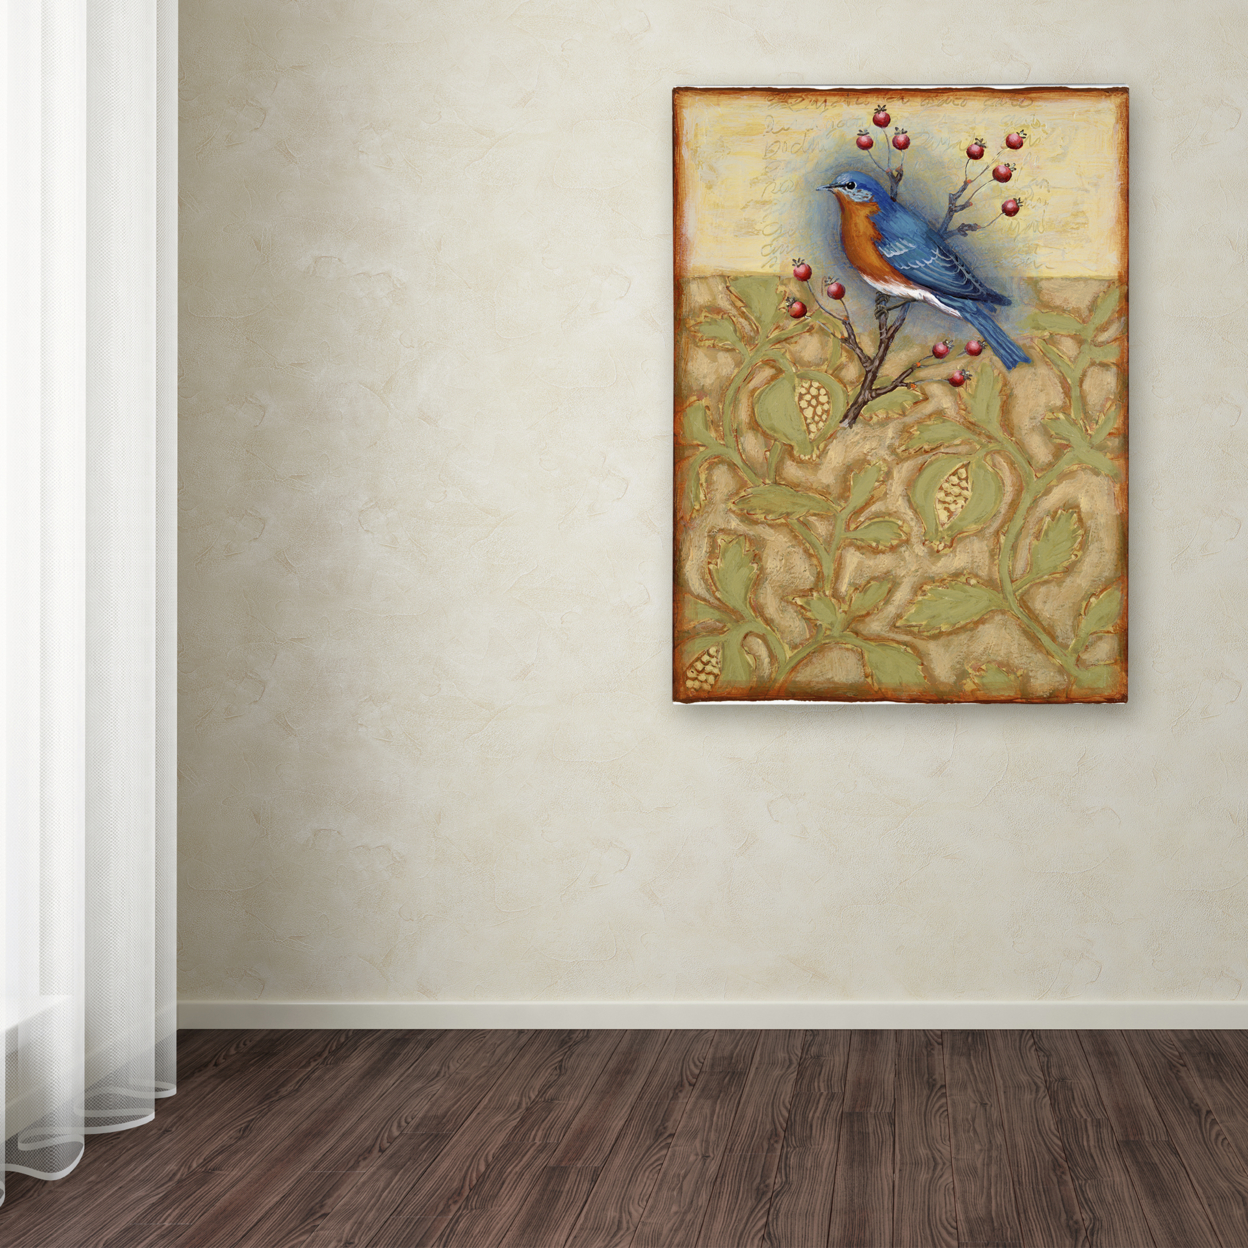 Rachel Paxton 'Salt Meadow Bird' Canvas Wall Art 35 X 47 Inches